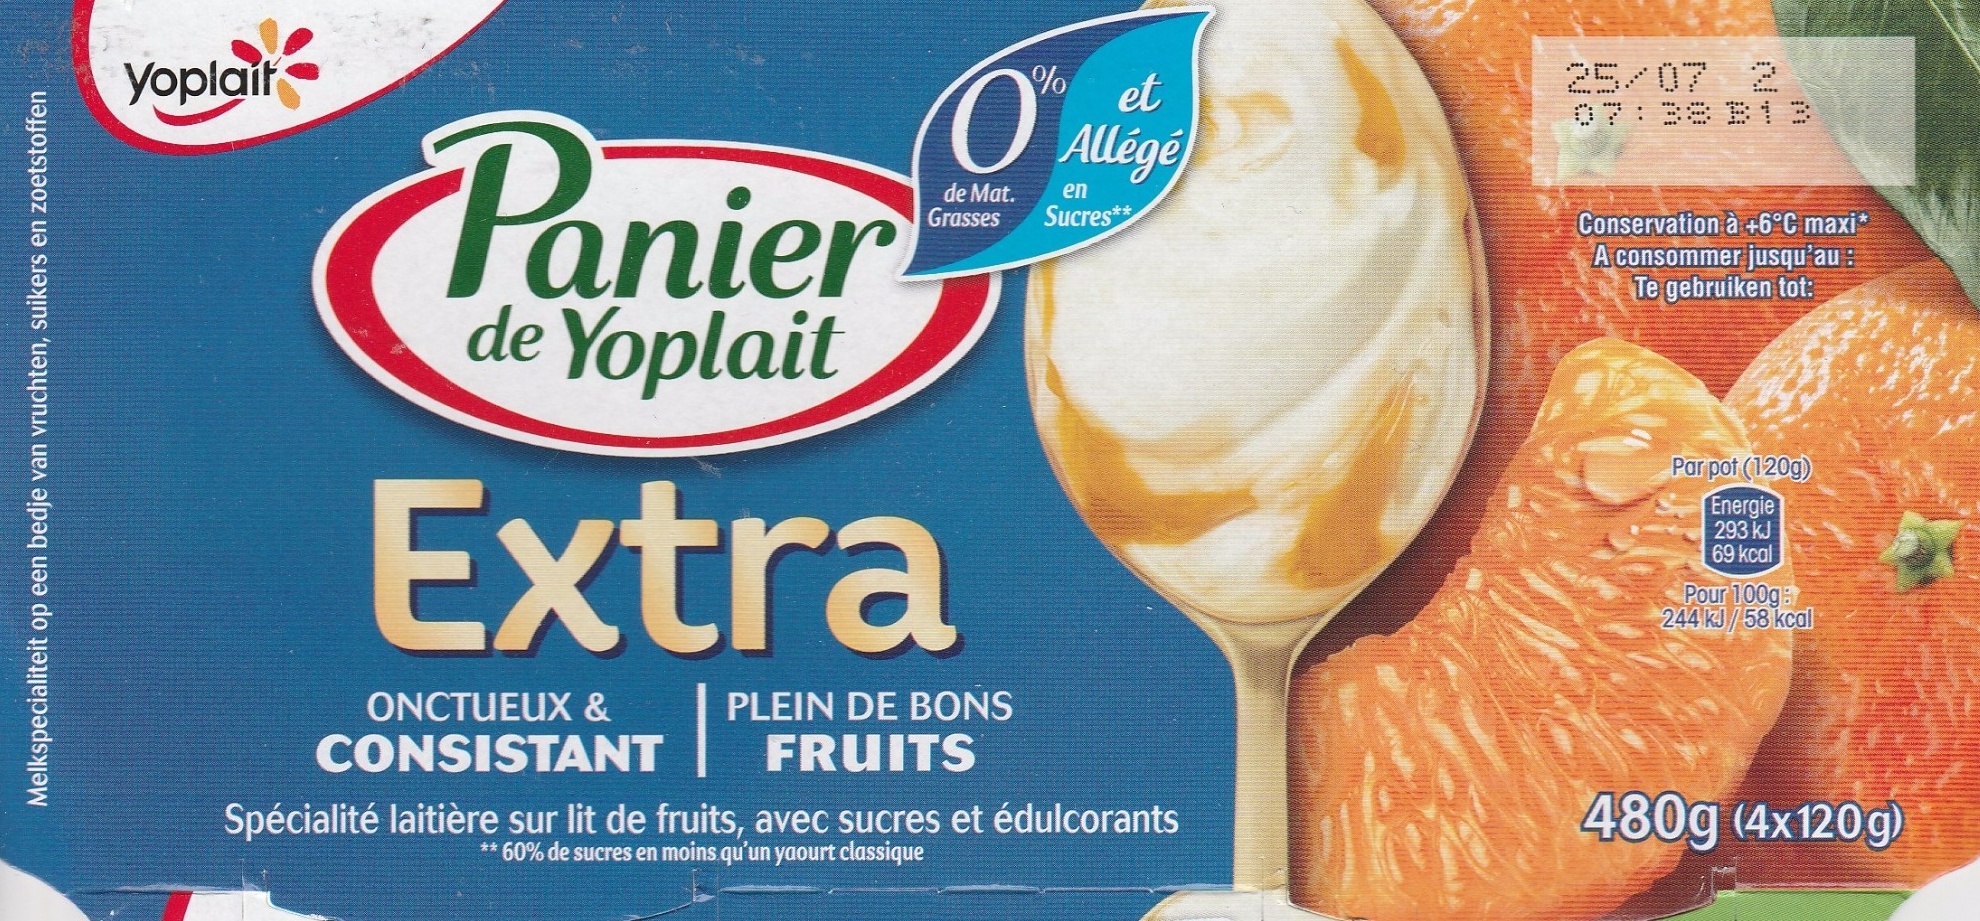 Panier de Yoplait Extra Mandarine - Product - fr